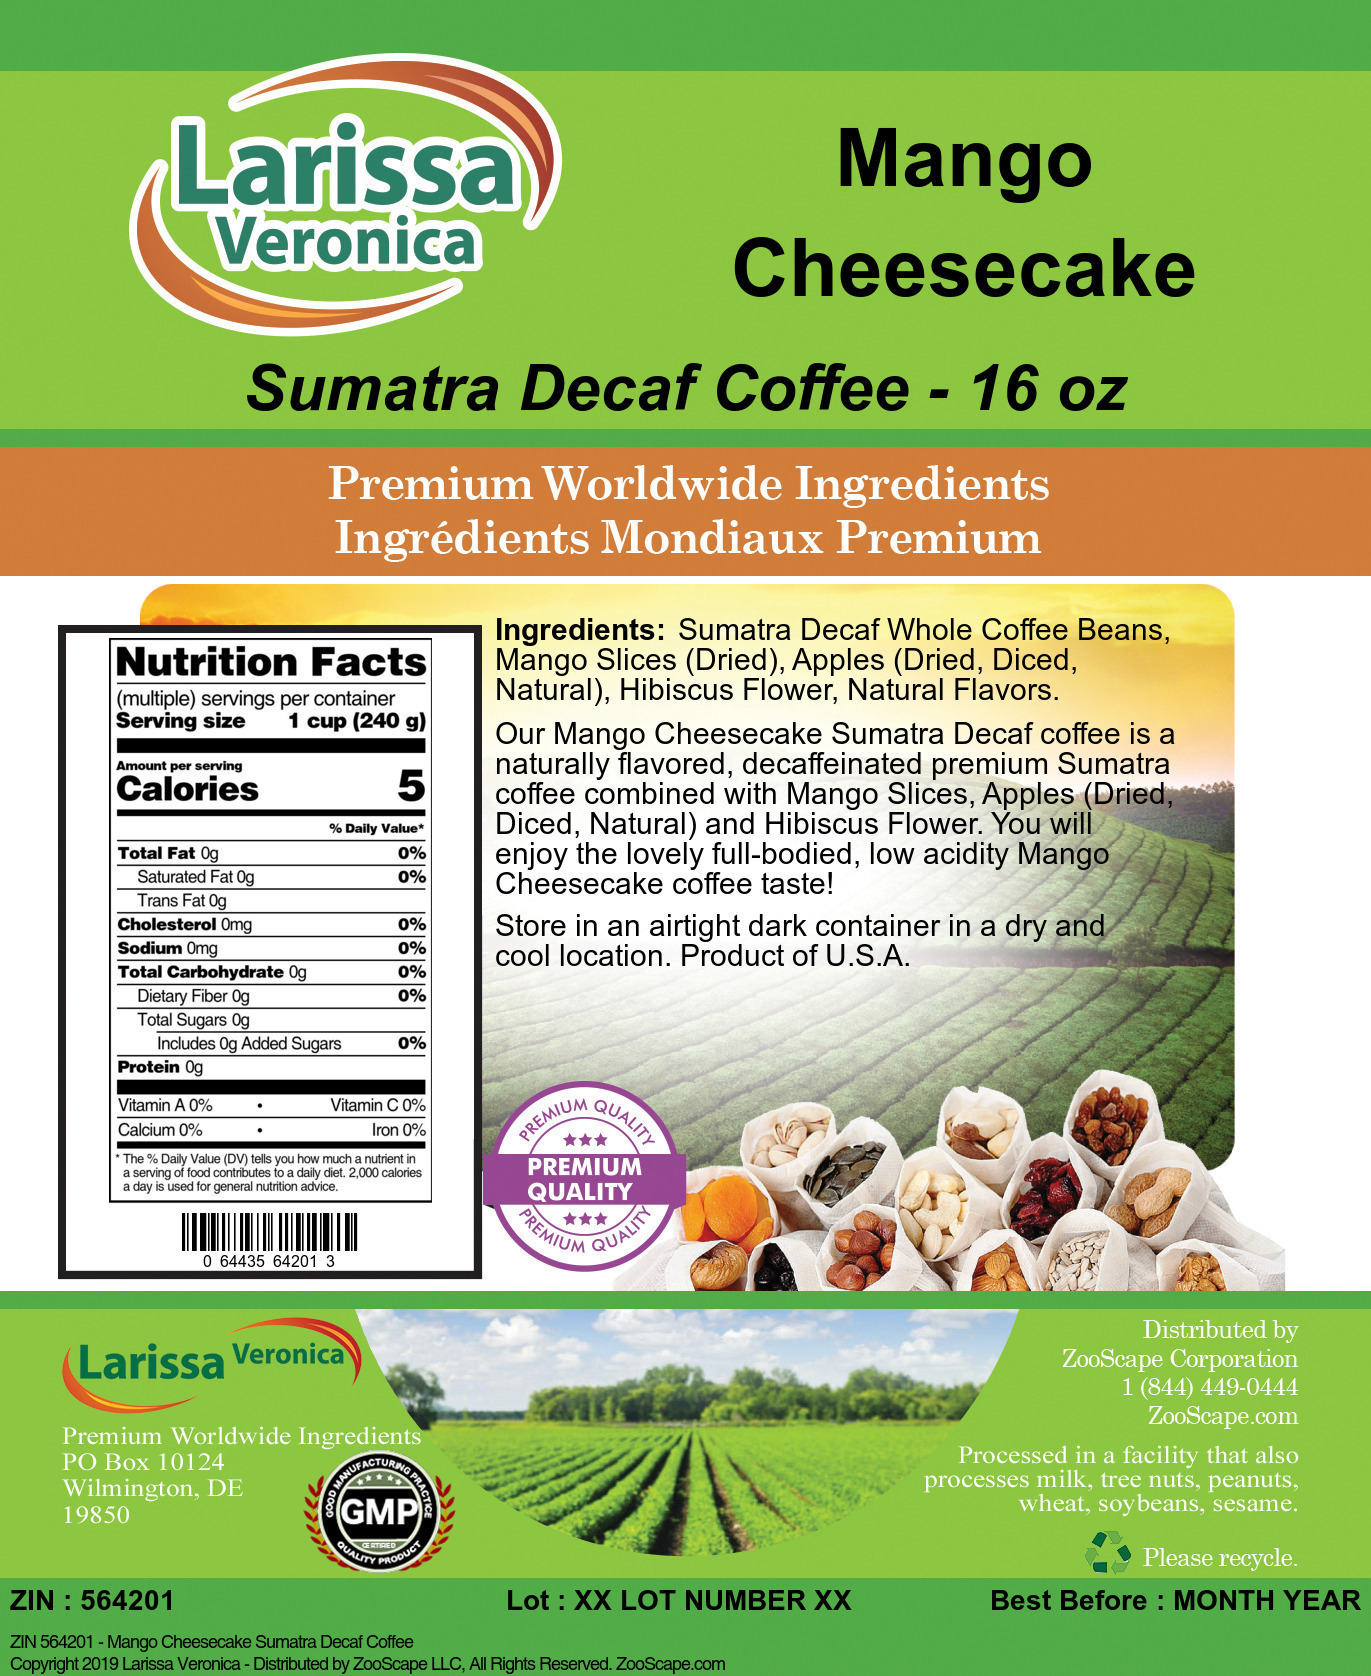 Mango Cheesecake Sumatra Decaf Coffee - Label